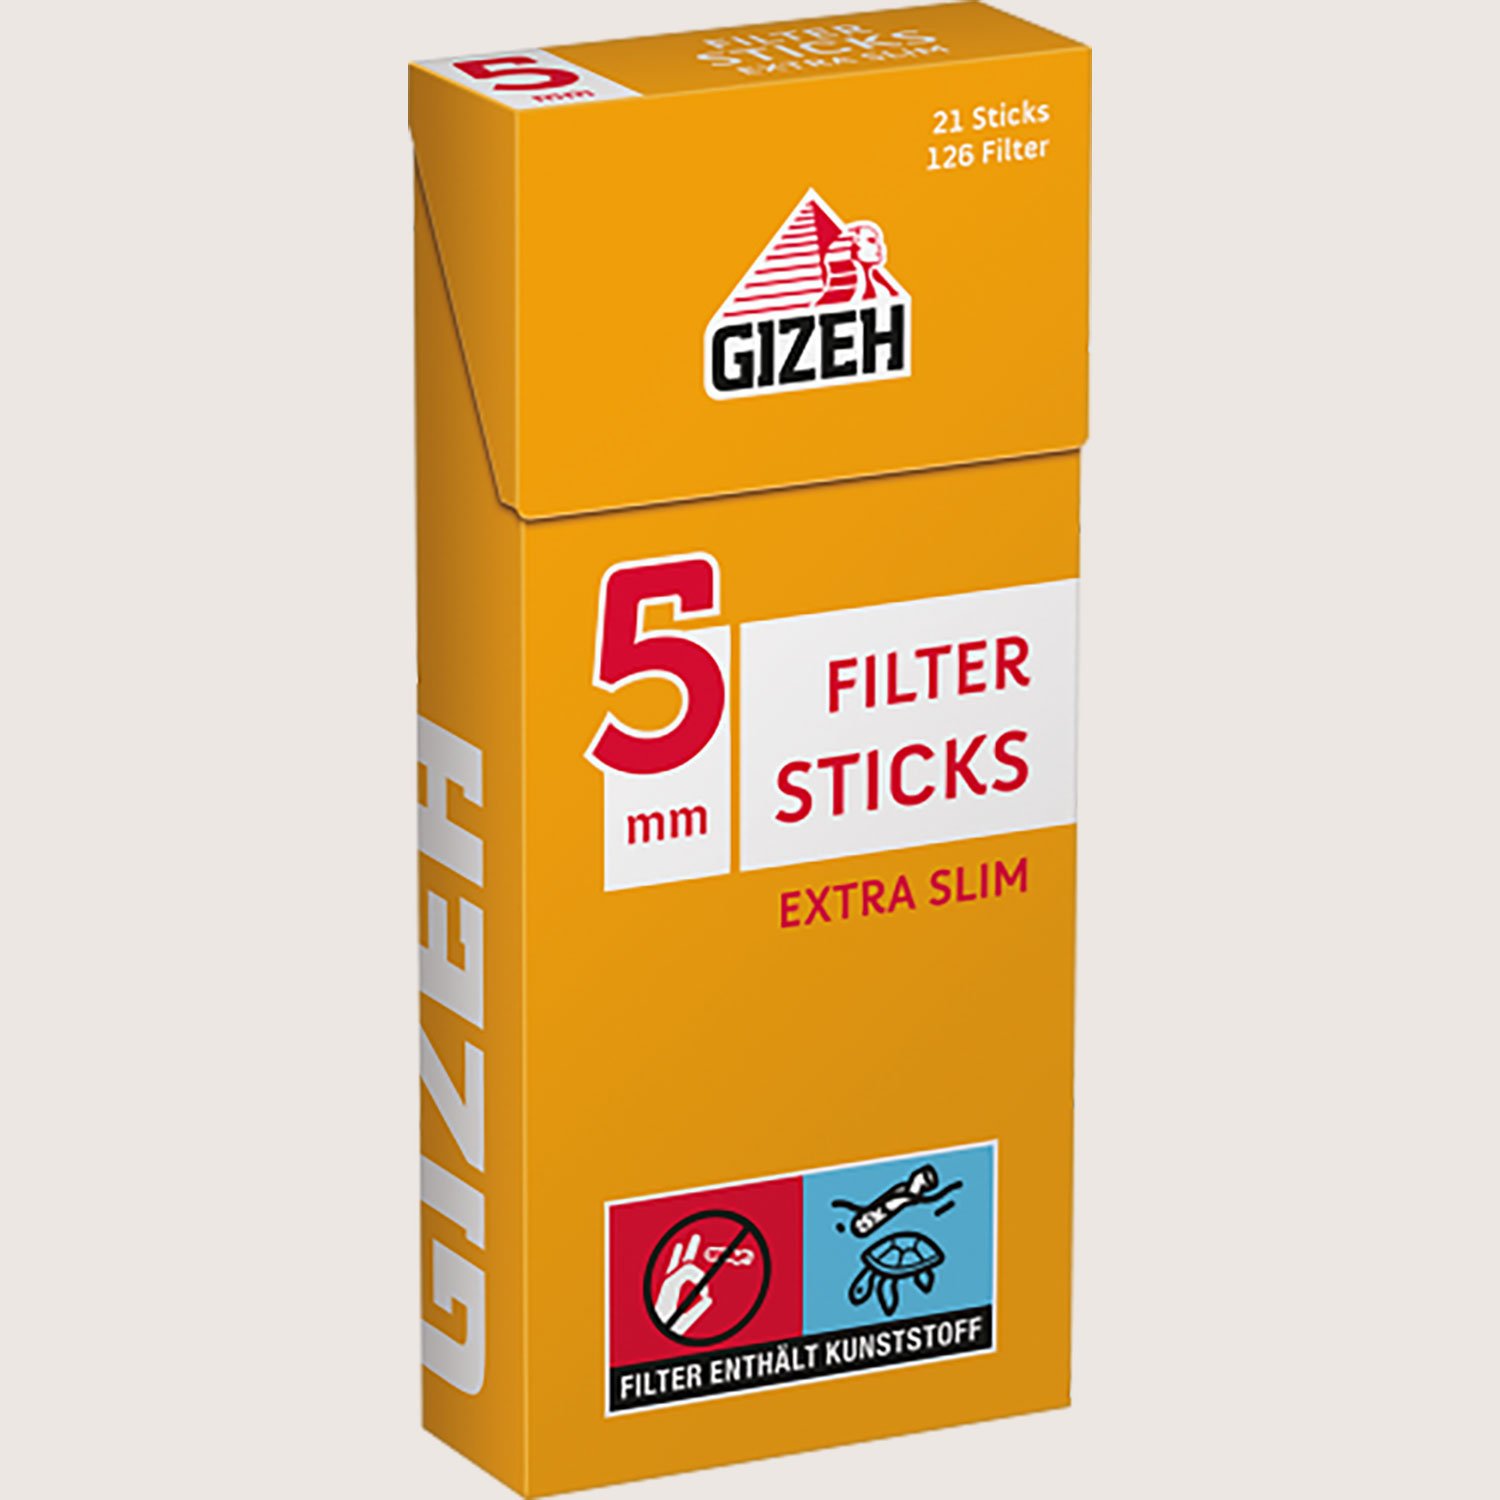 Gizeh Filter Sticks 5 mm Extra Slim 126 Filter